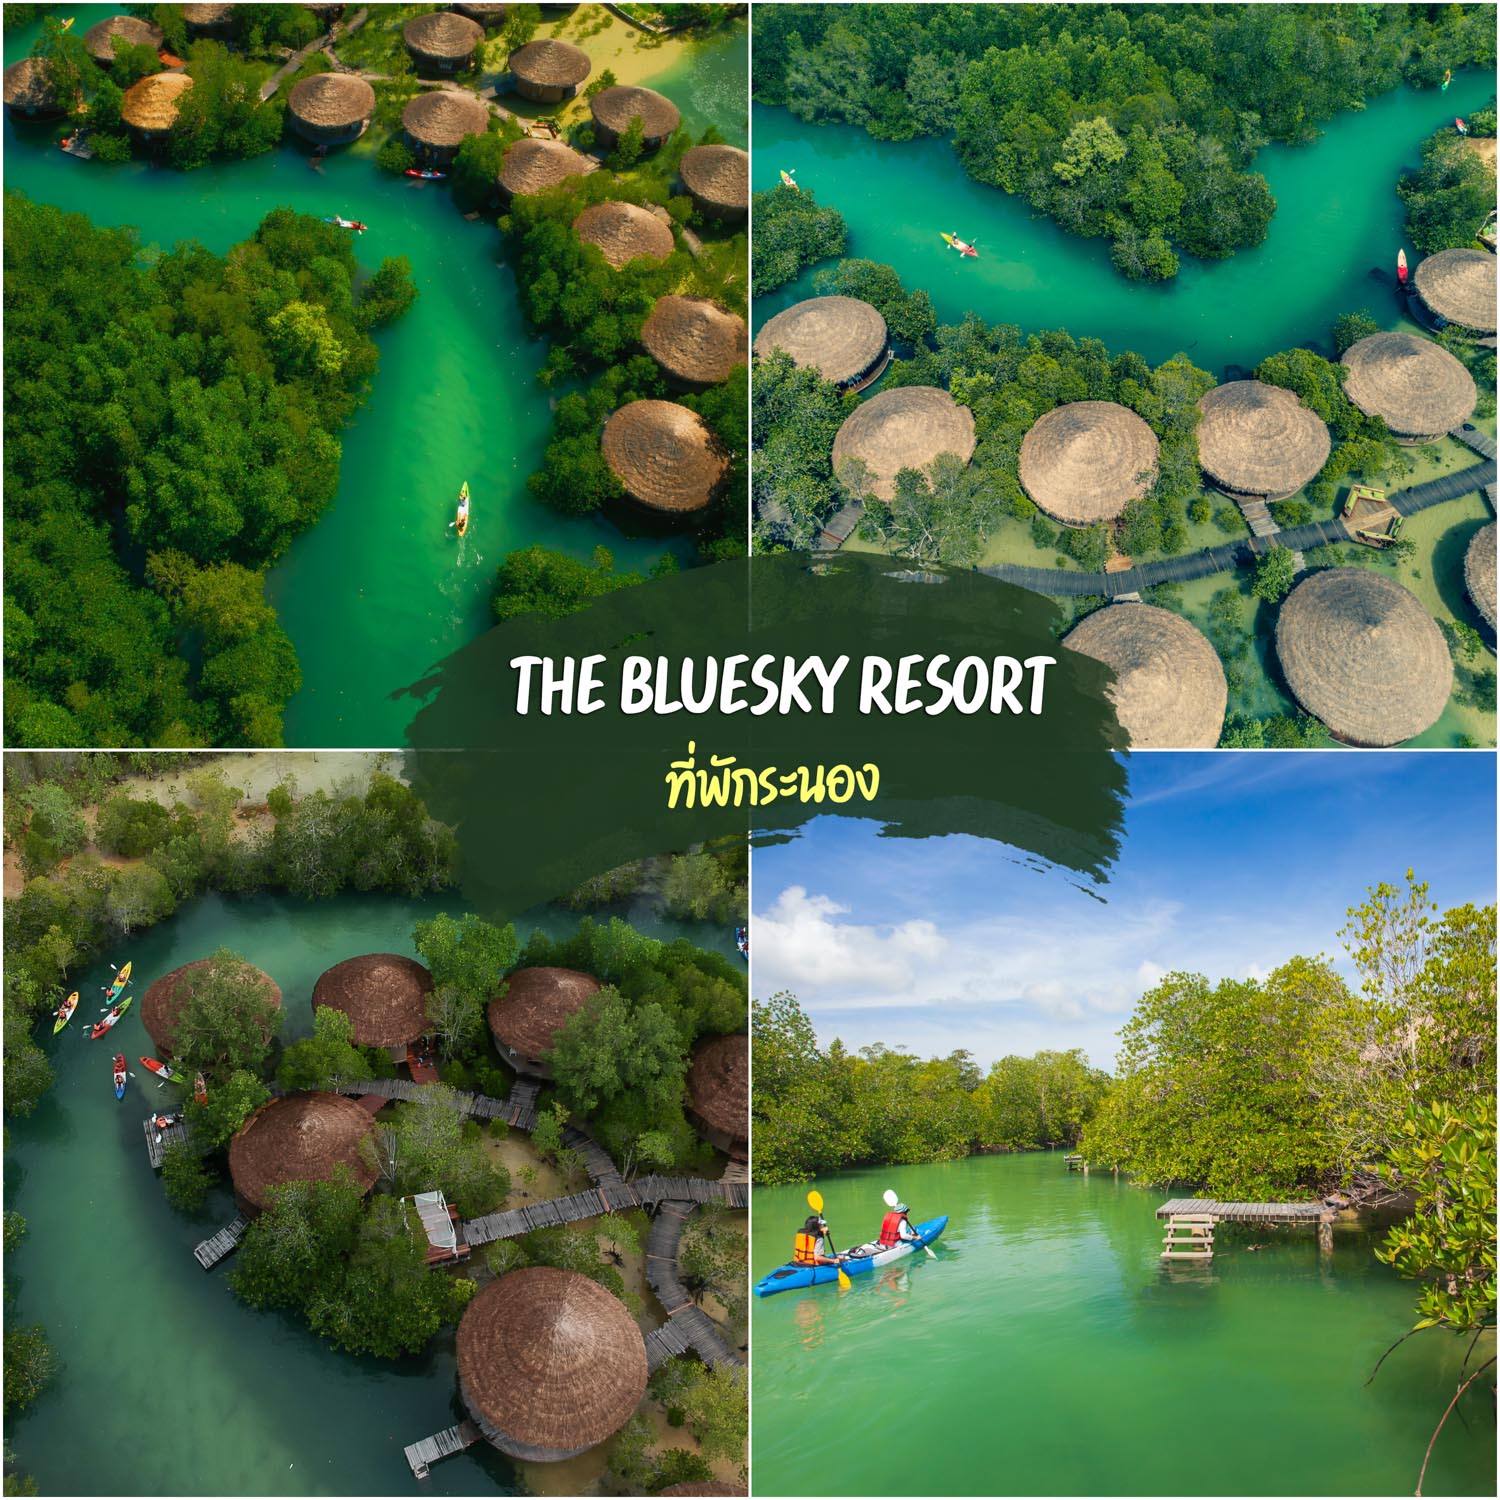 The Blue Sky Resort ระนอง ที่พักน้ำใสสีฟ้าแห่งแดนใต้ จุดเช็คอินสุดชิวบนเกาะพยาม น้ำสีเขียวมรกต